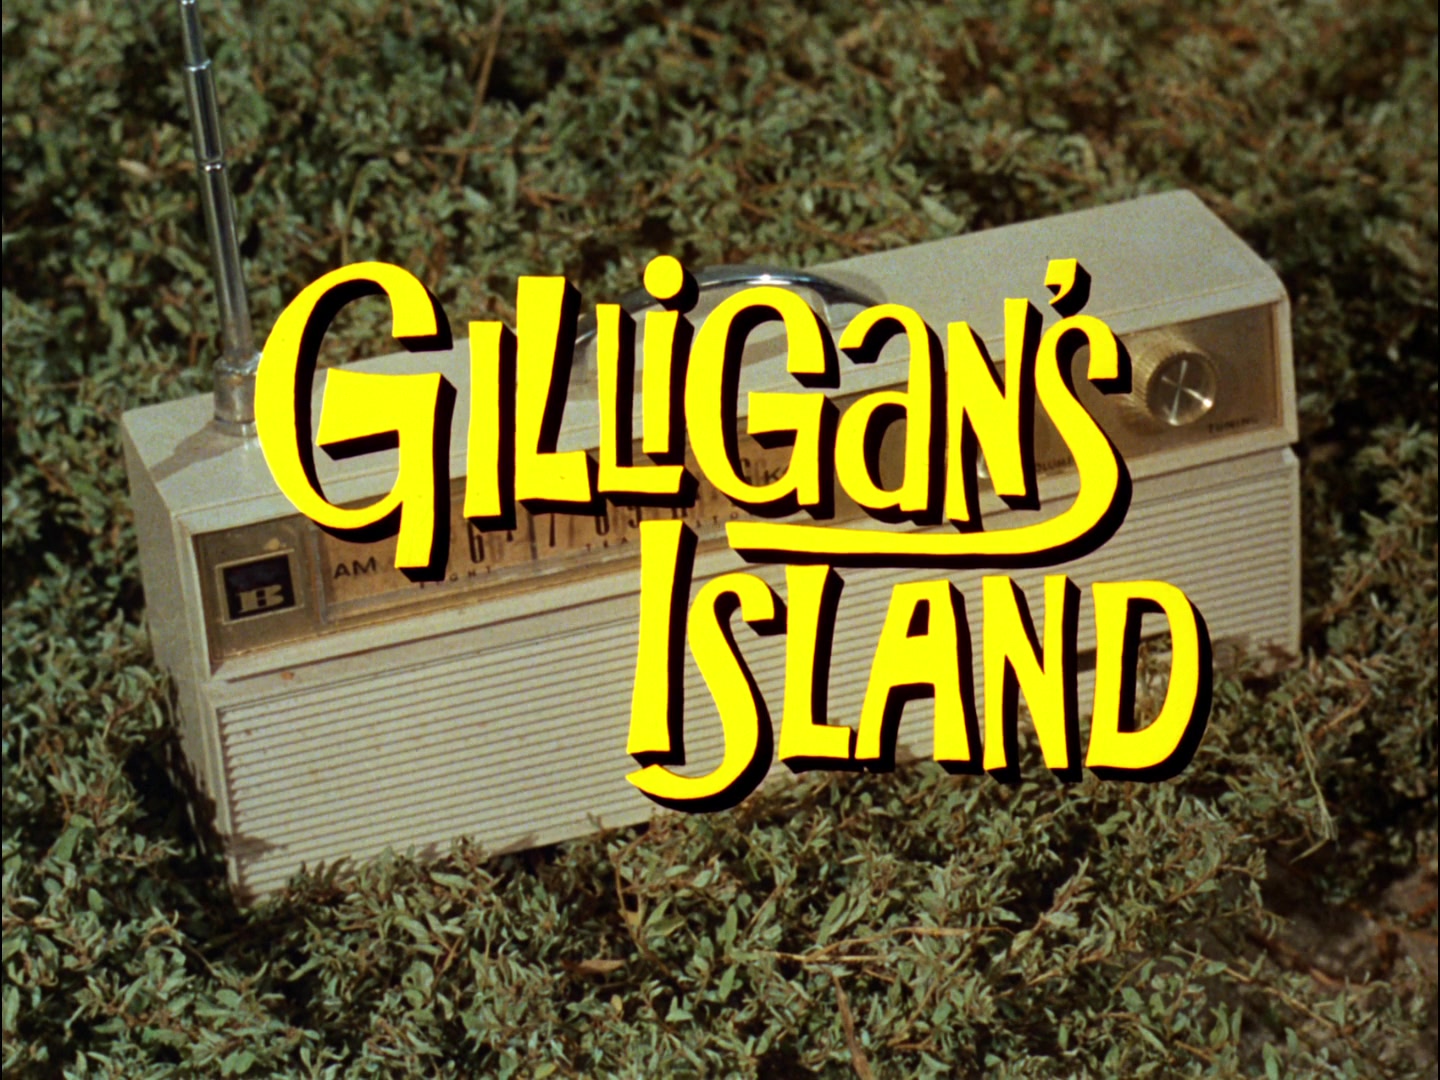 Gilligan's Island Season 3 Image | Fancaps